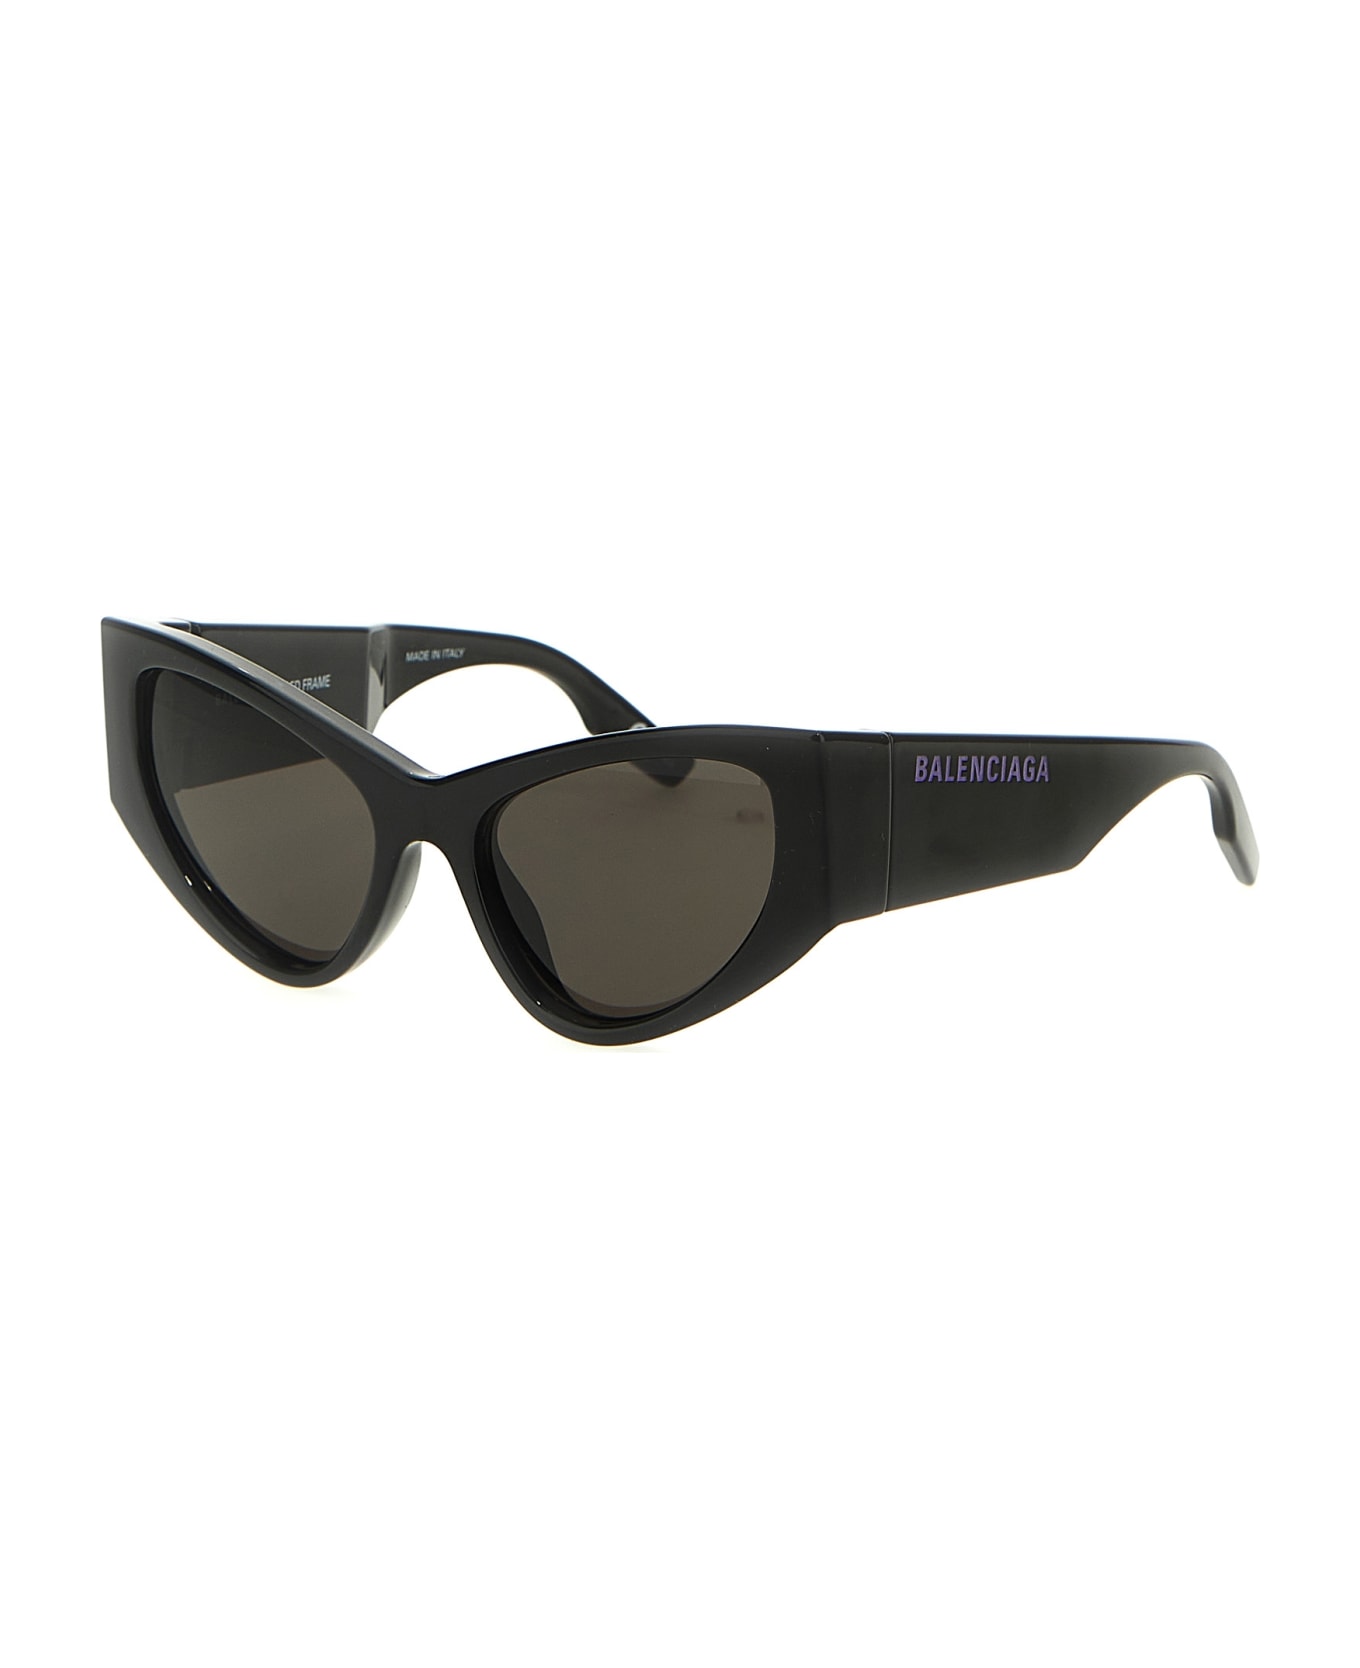 Balenciaga Eyewear 'led Frame' Sunglasses - Black サングラス